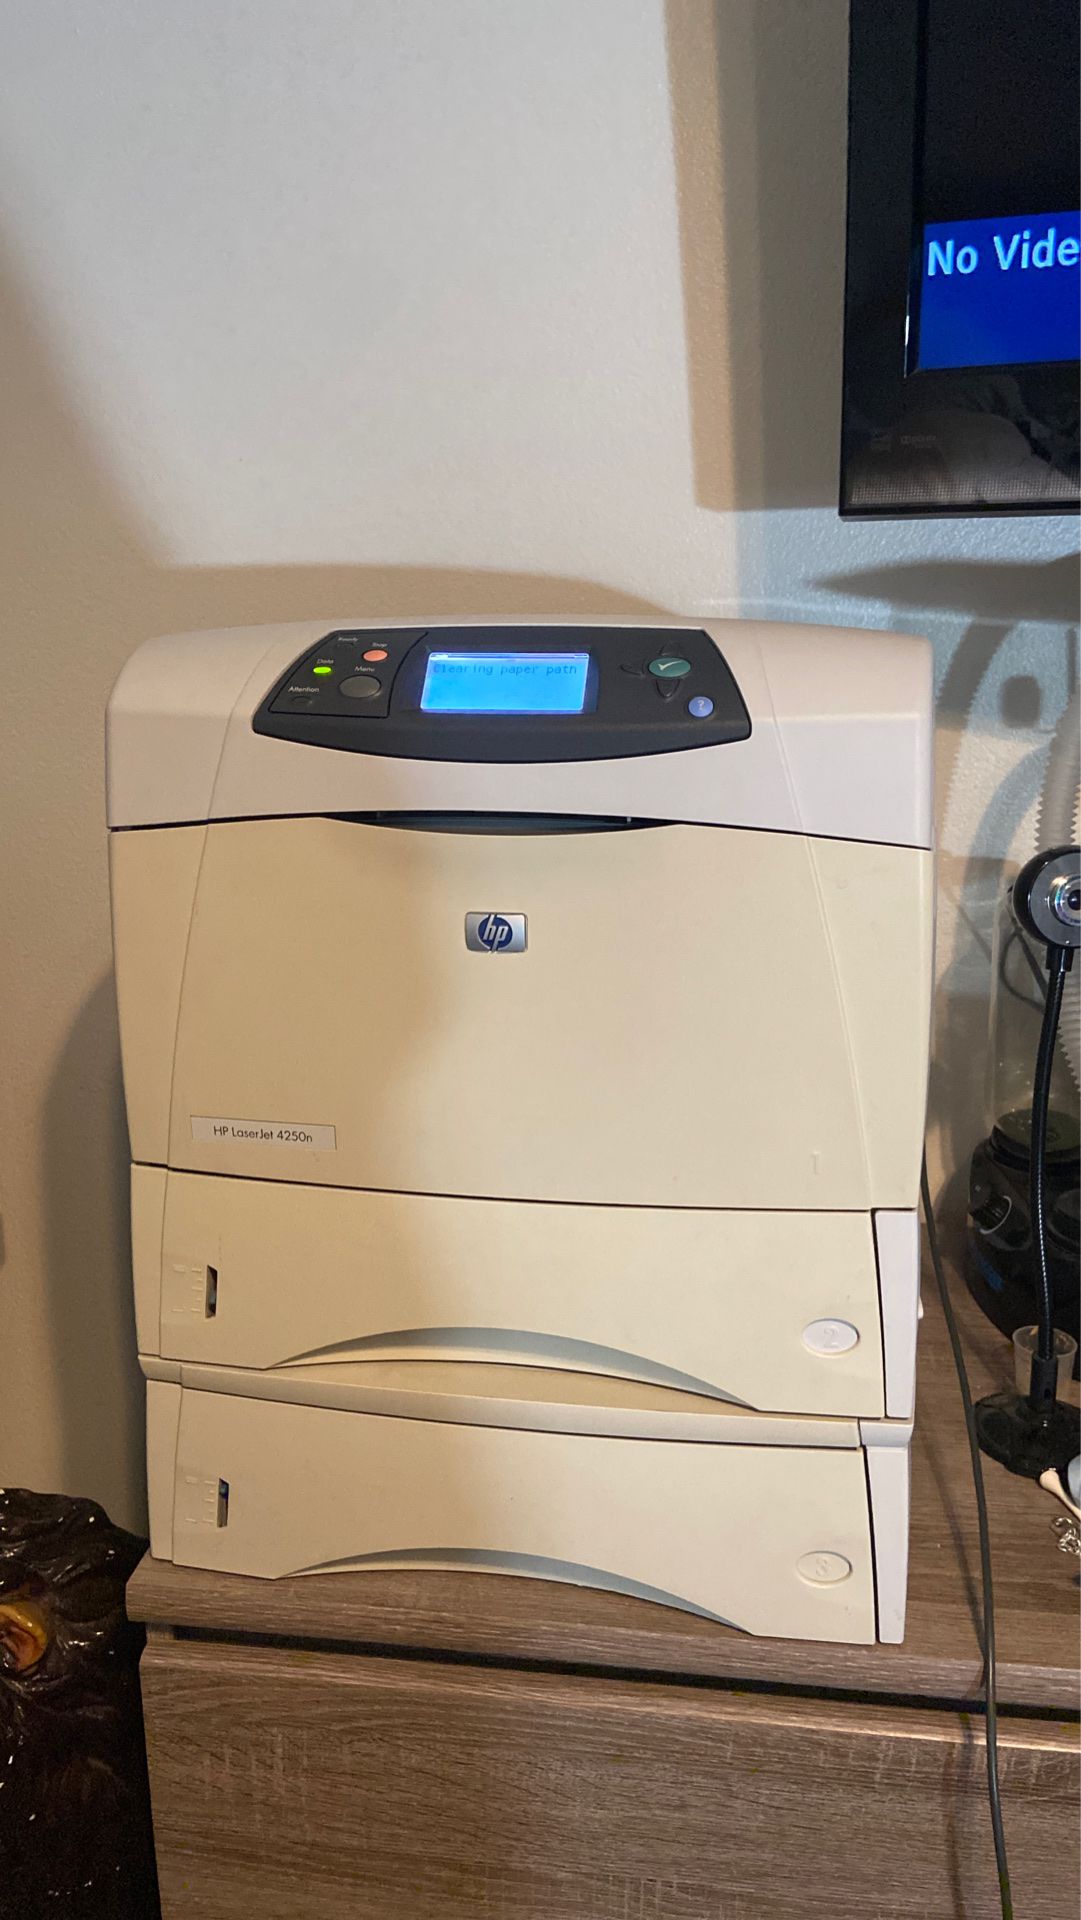 Hp LaserJet 4250n printer